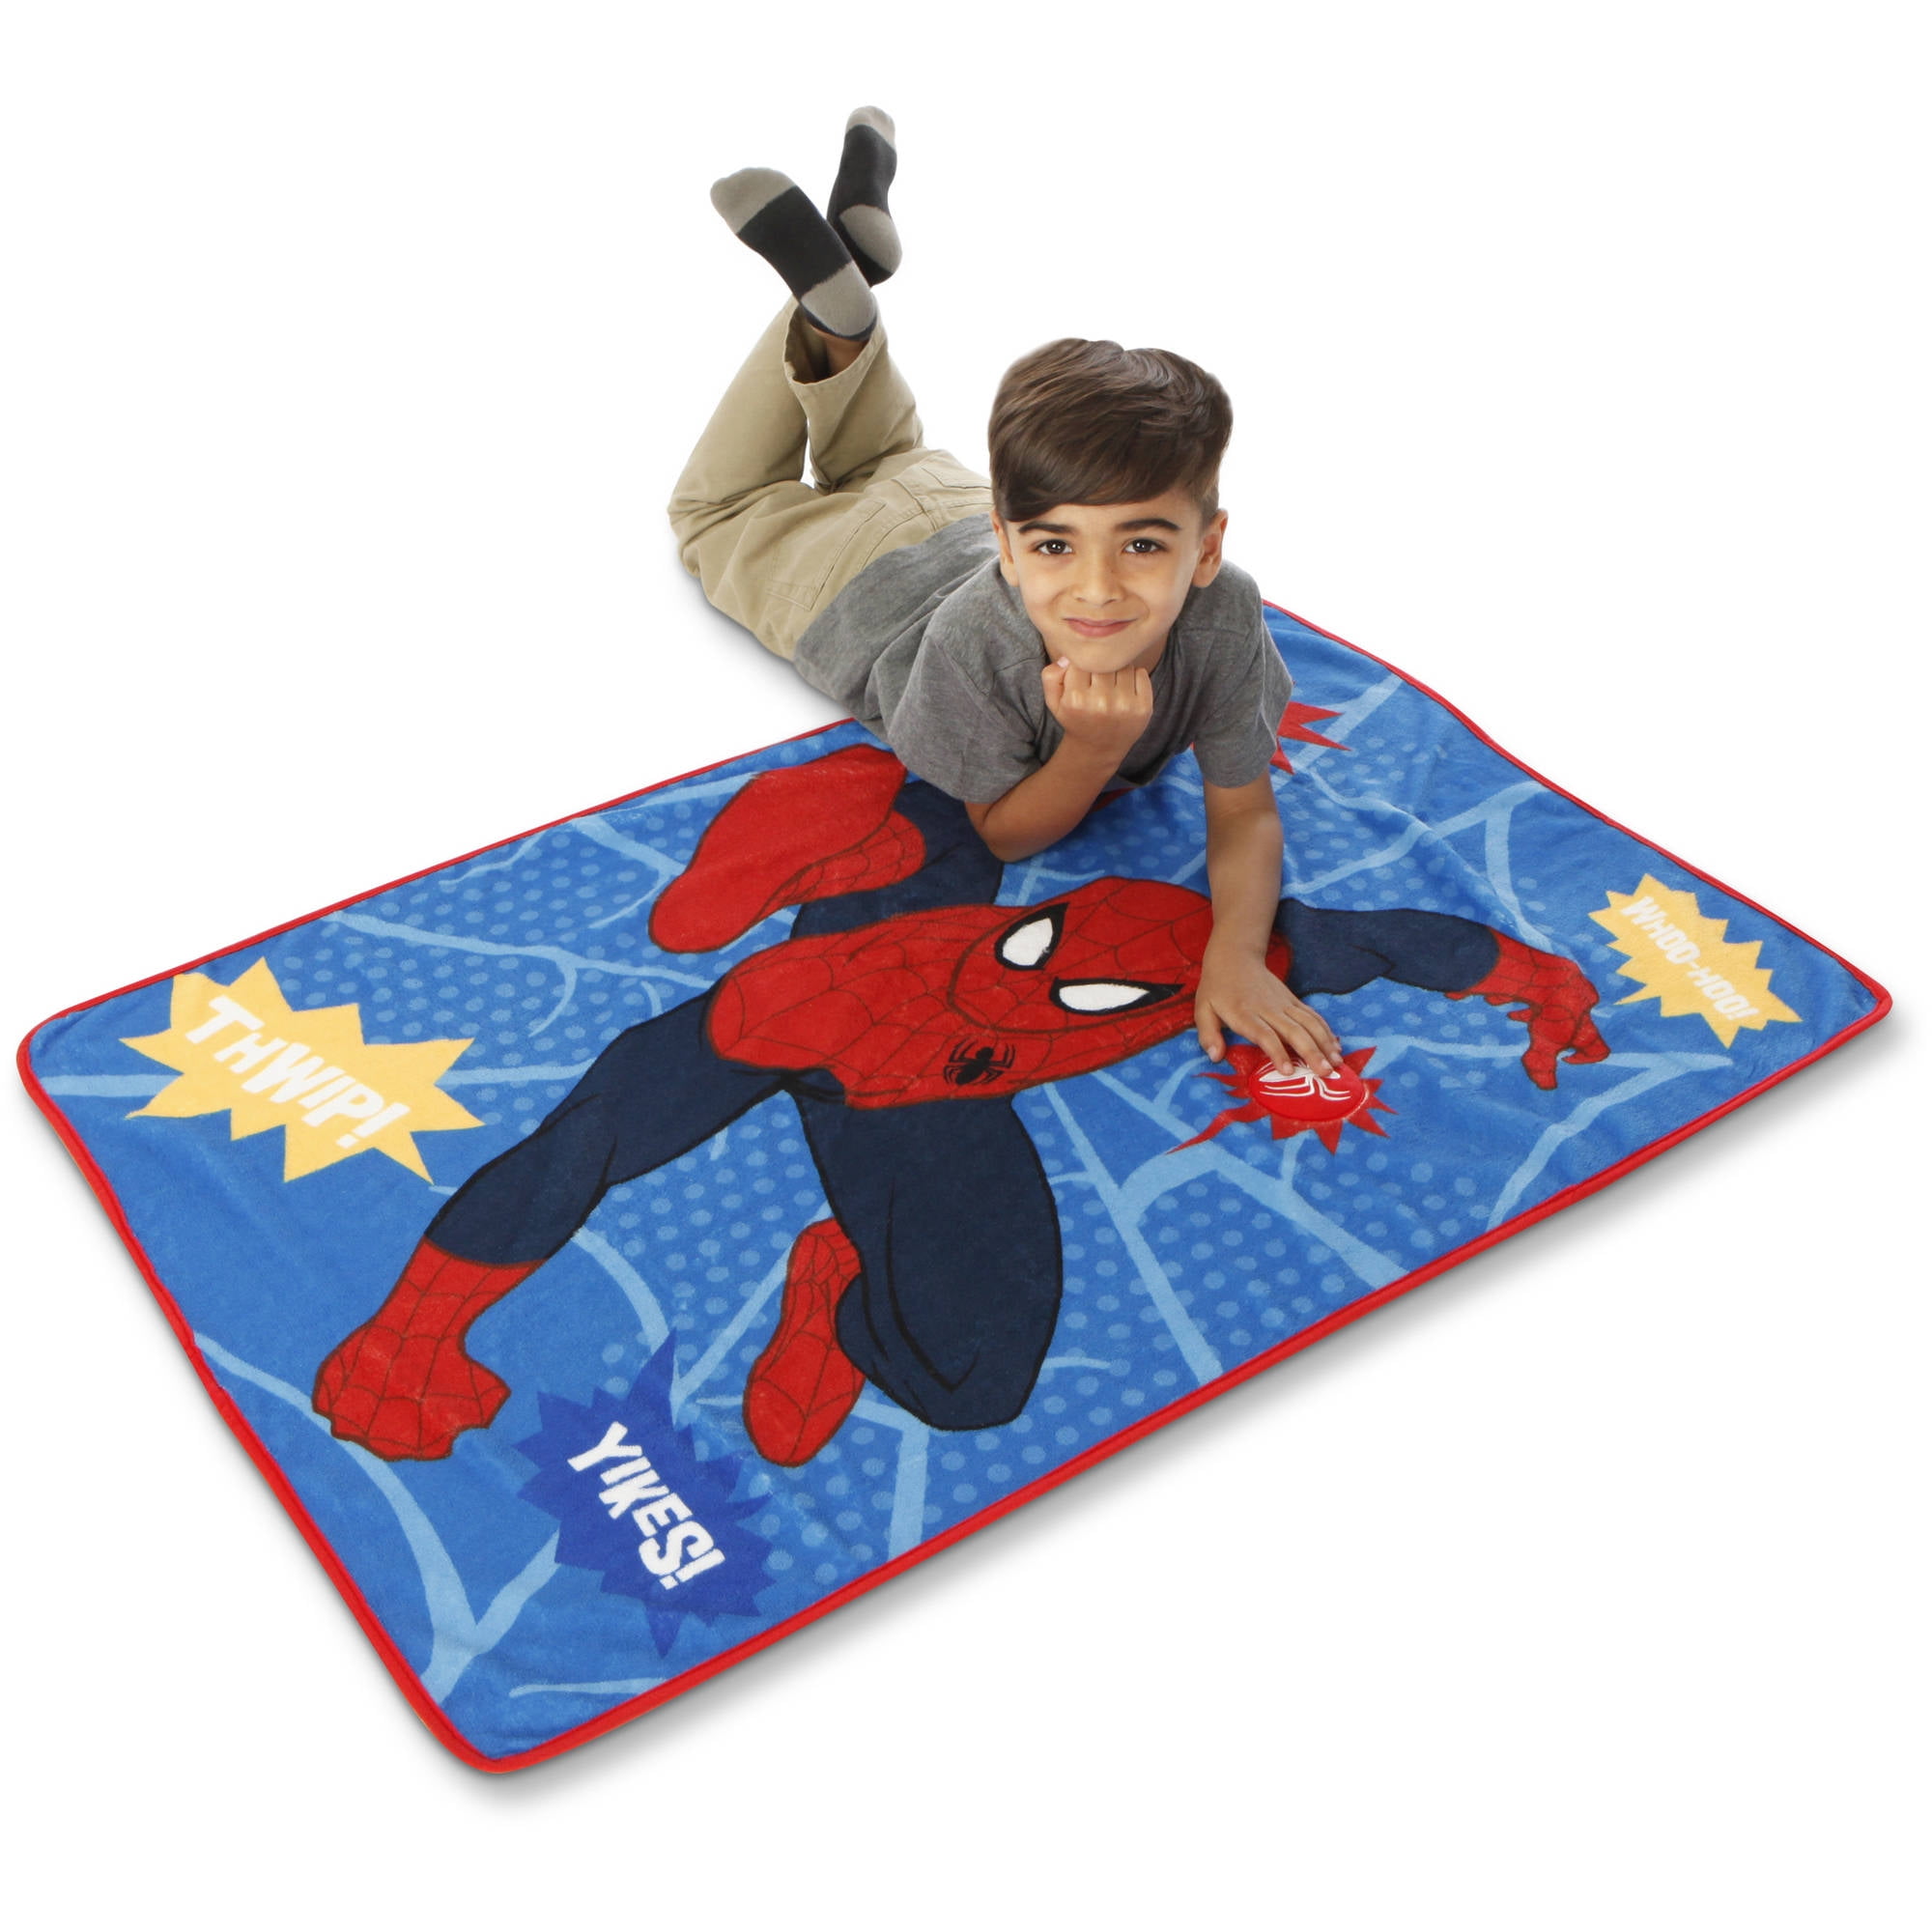 Marvel's Spider-Man Toddler Blanket with Sound - Walmart.com - Walmart.com